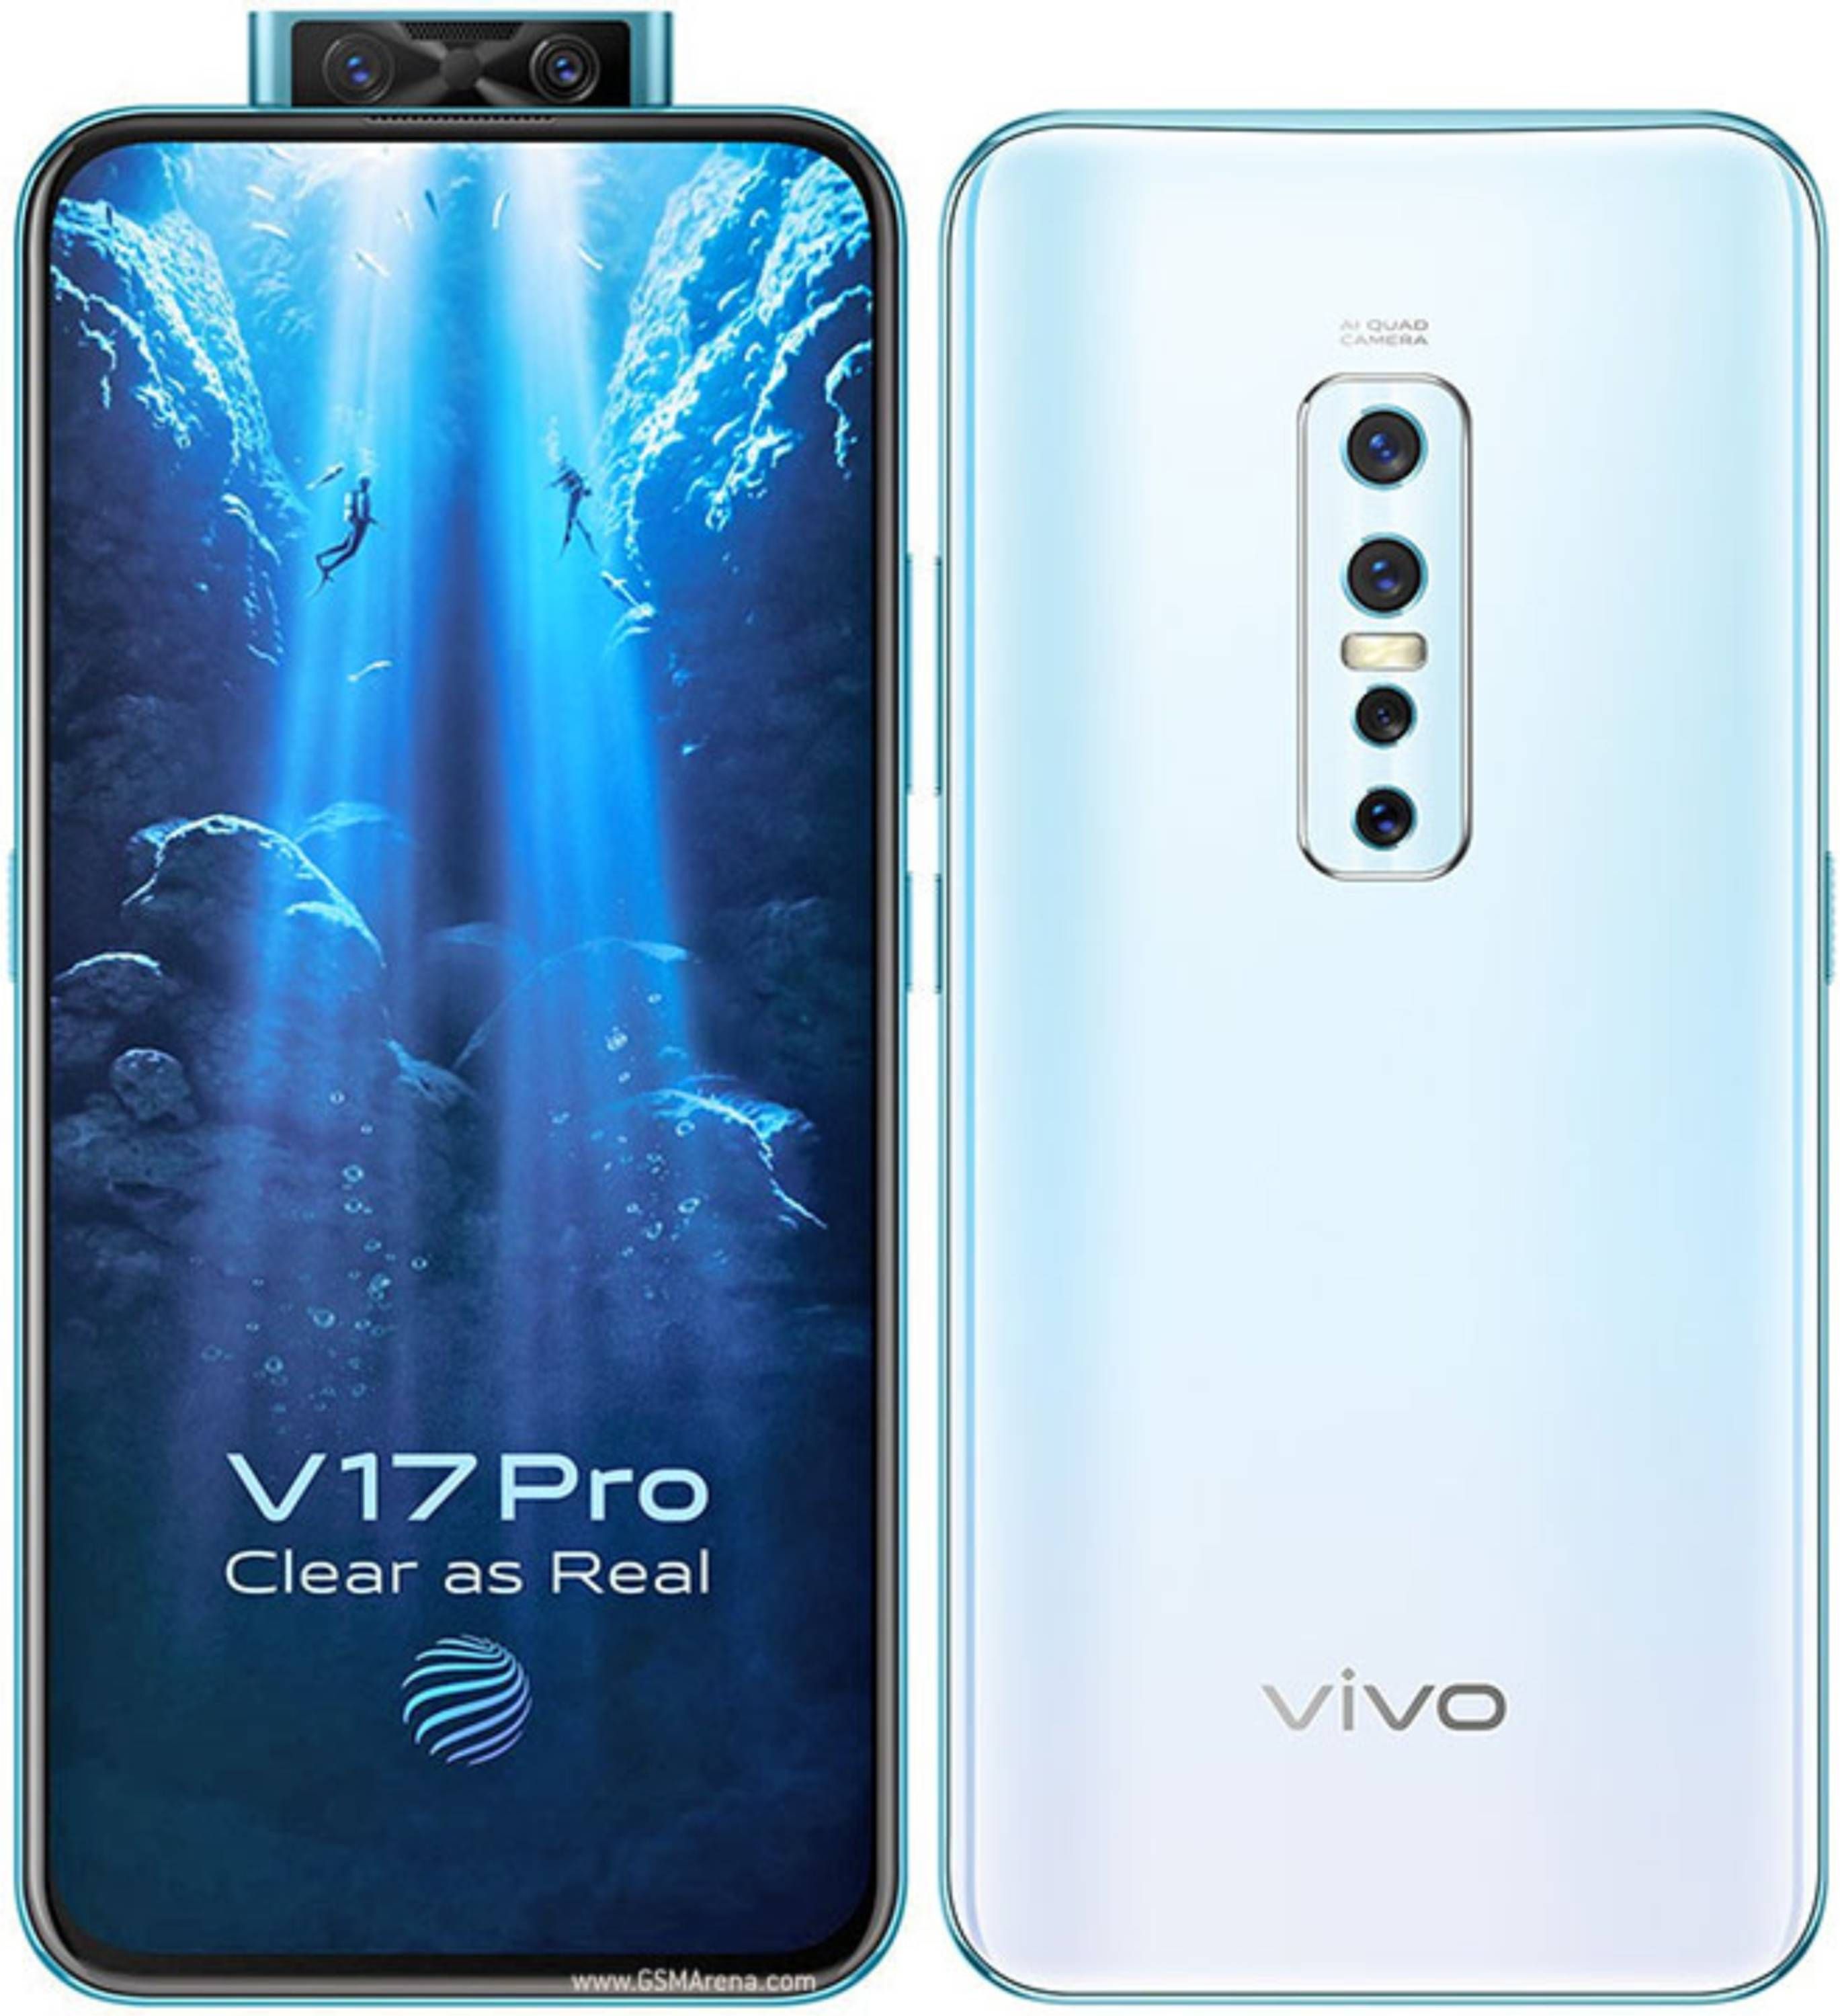 Vivo V17 Pro Specifications and Price in Kenya